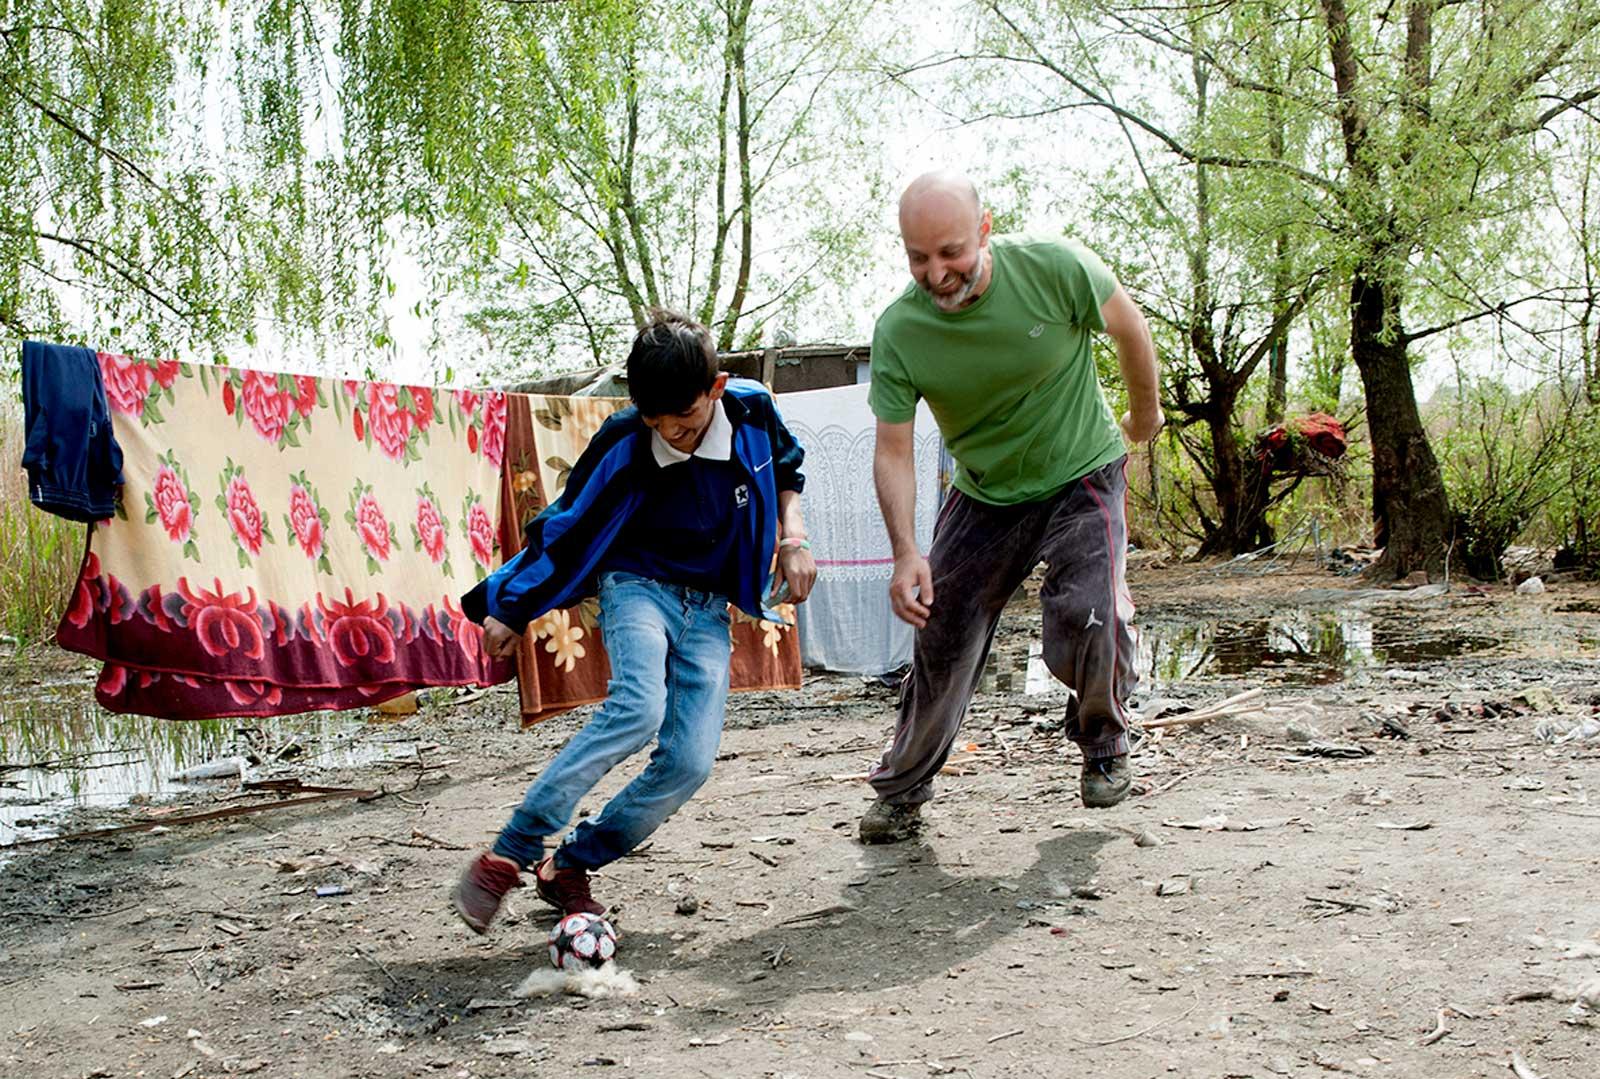 Valeriu and boy playing football